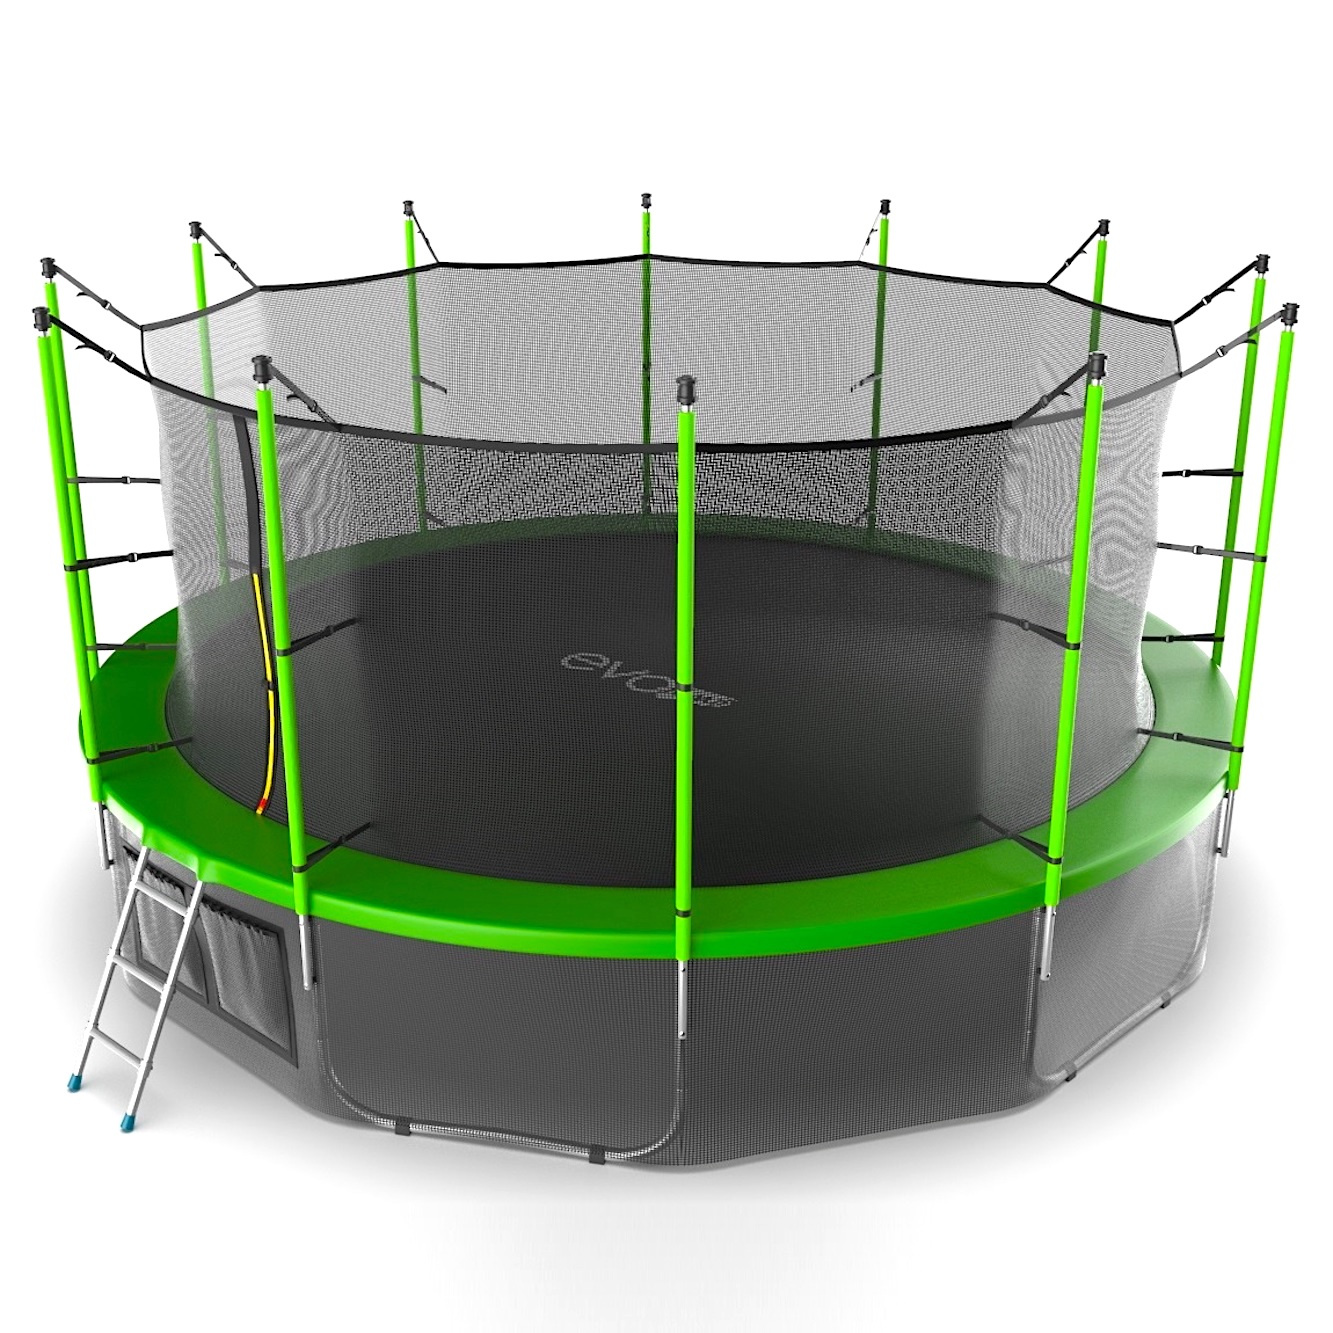 Evo Jump Internal 16ft (Green) + Lower net из каталога батутов в Москве по цене 56390 ₽